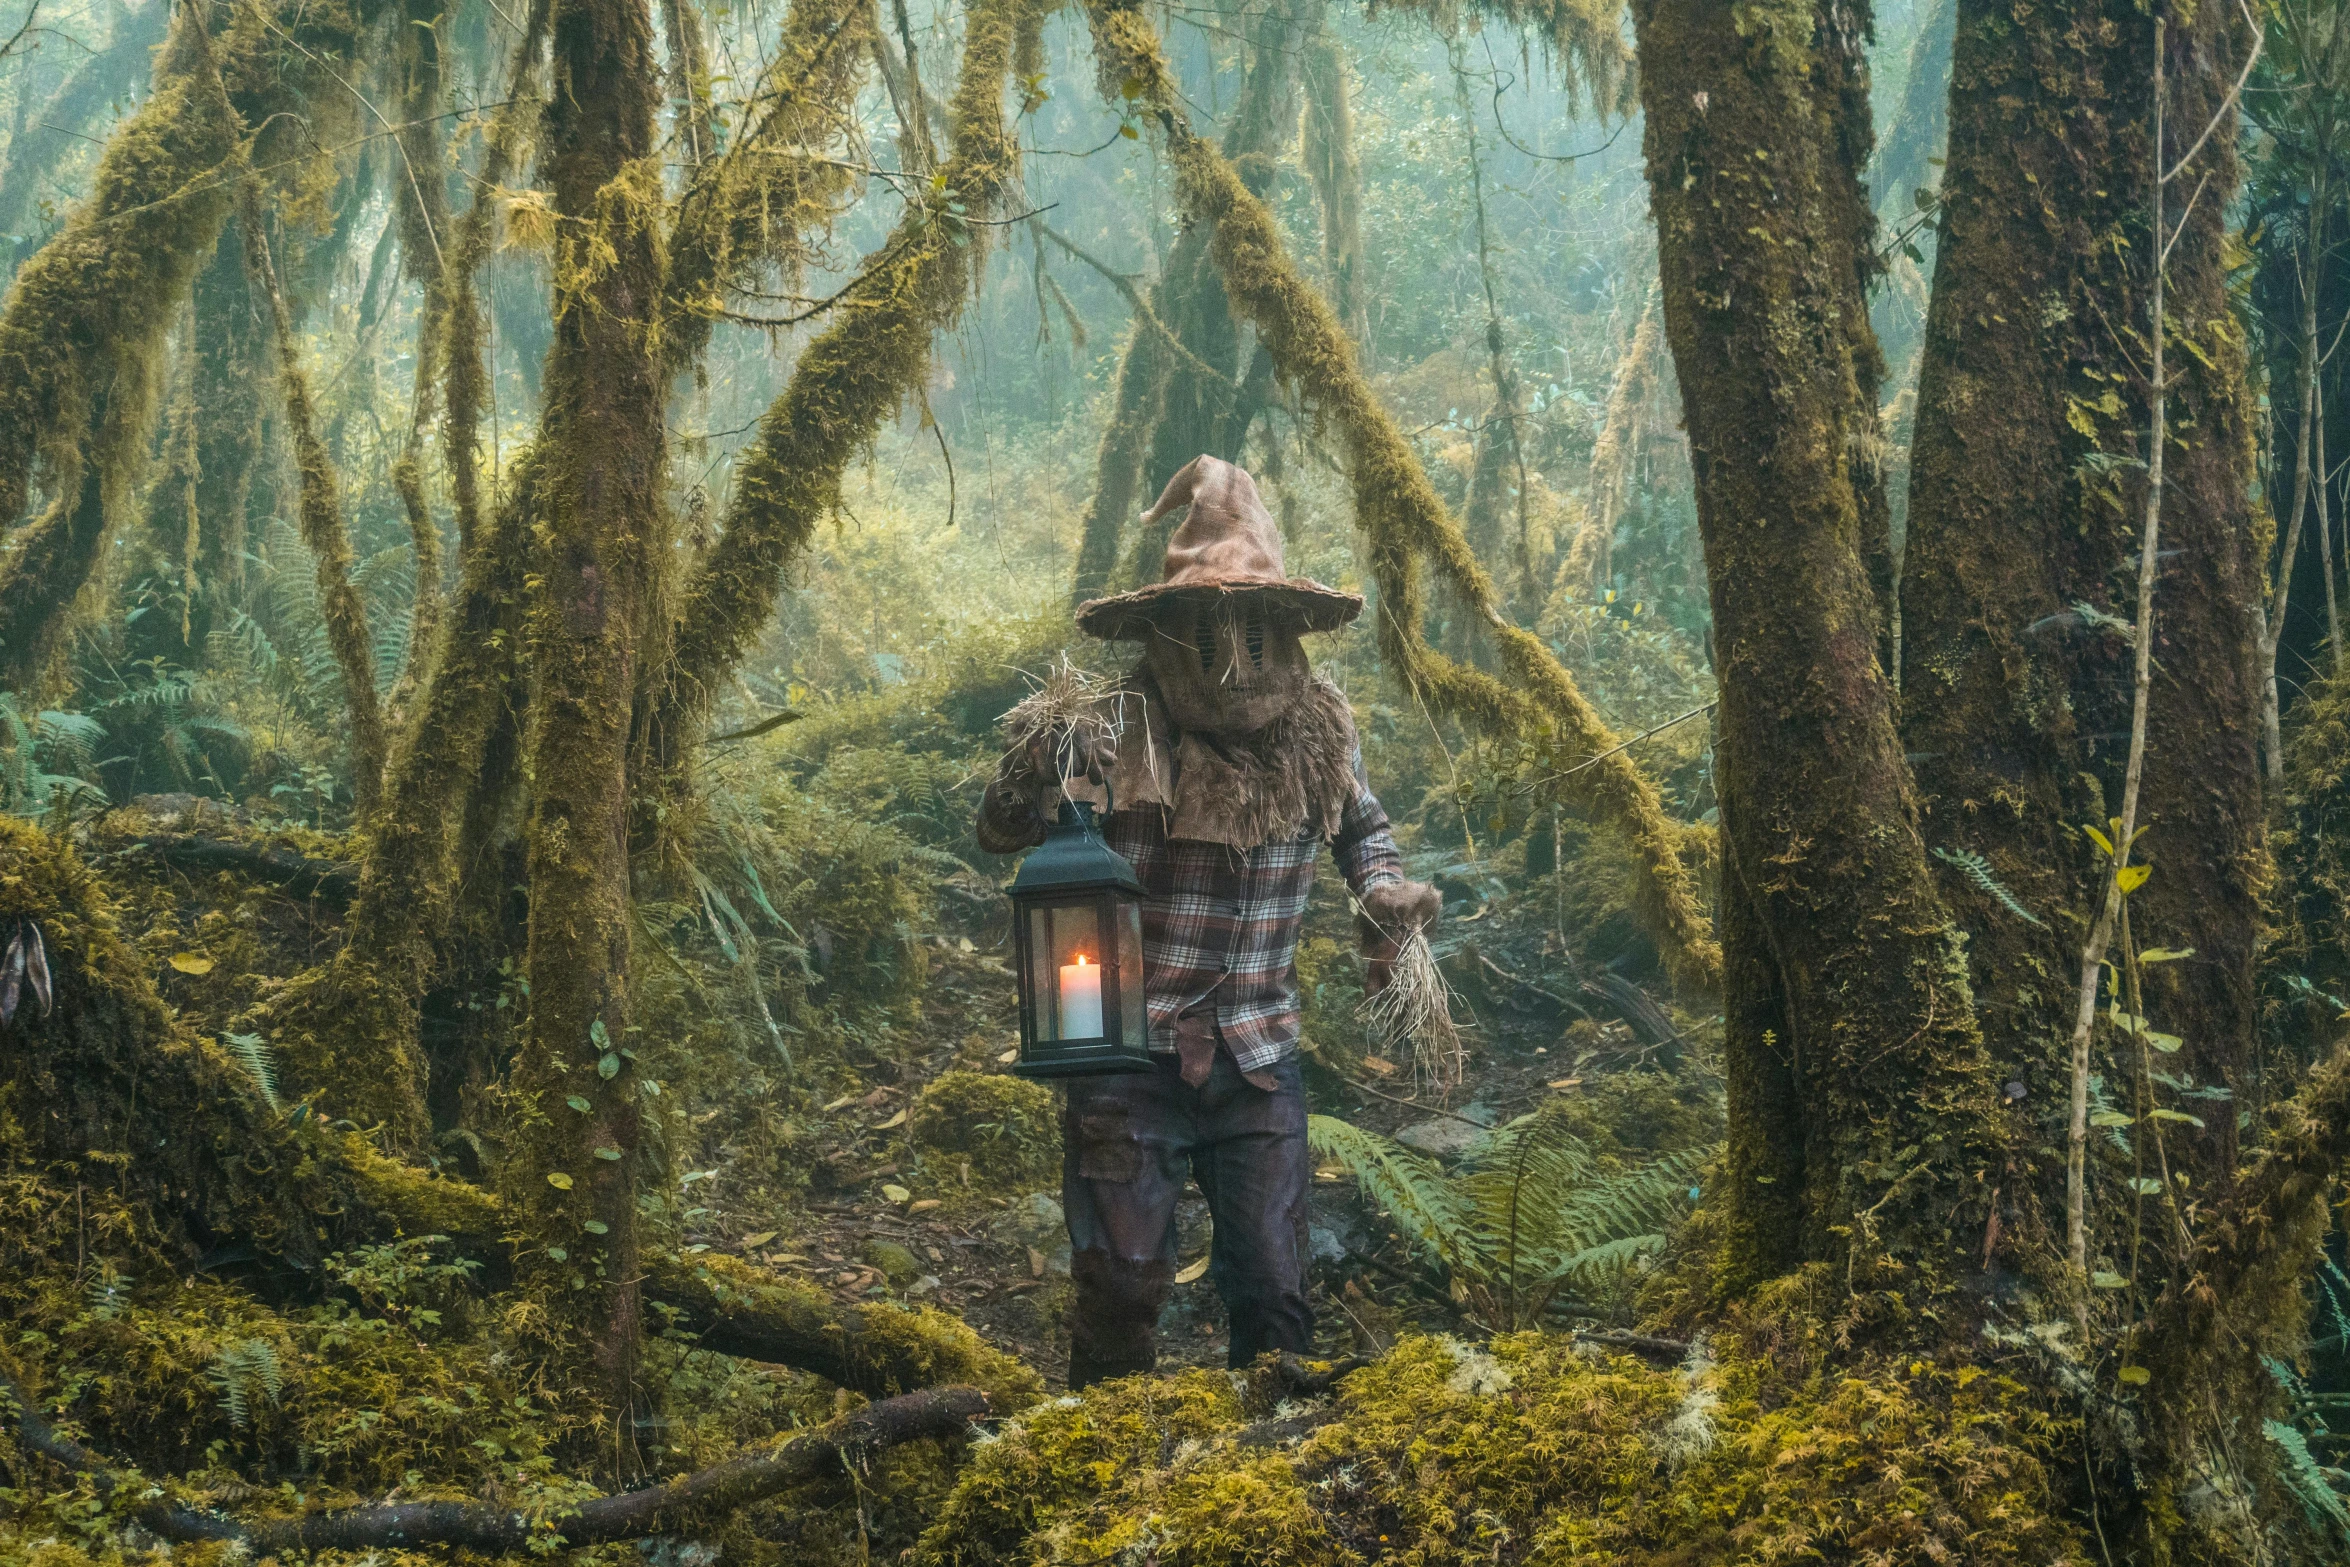 a man walking through the woods holding an illuminated lantern